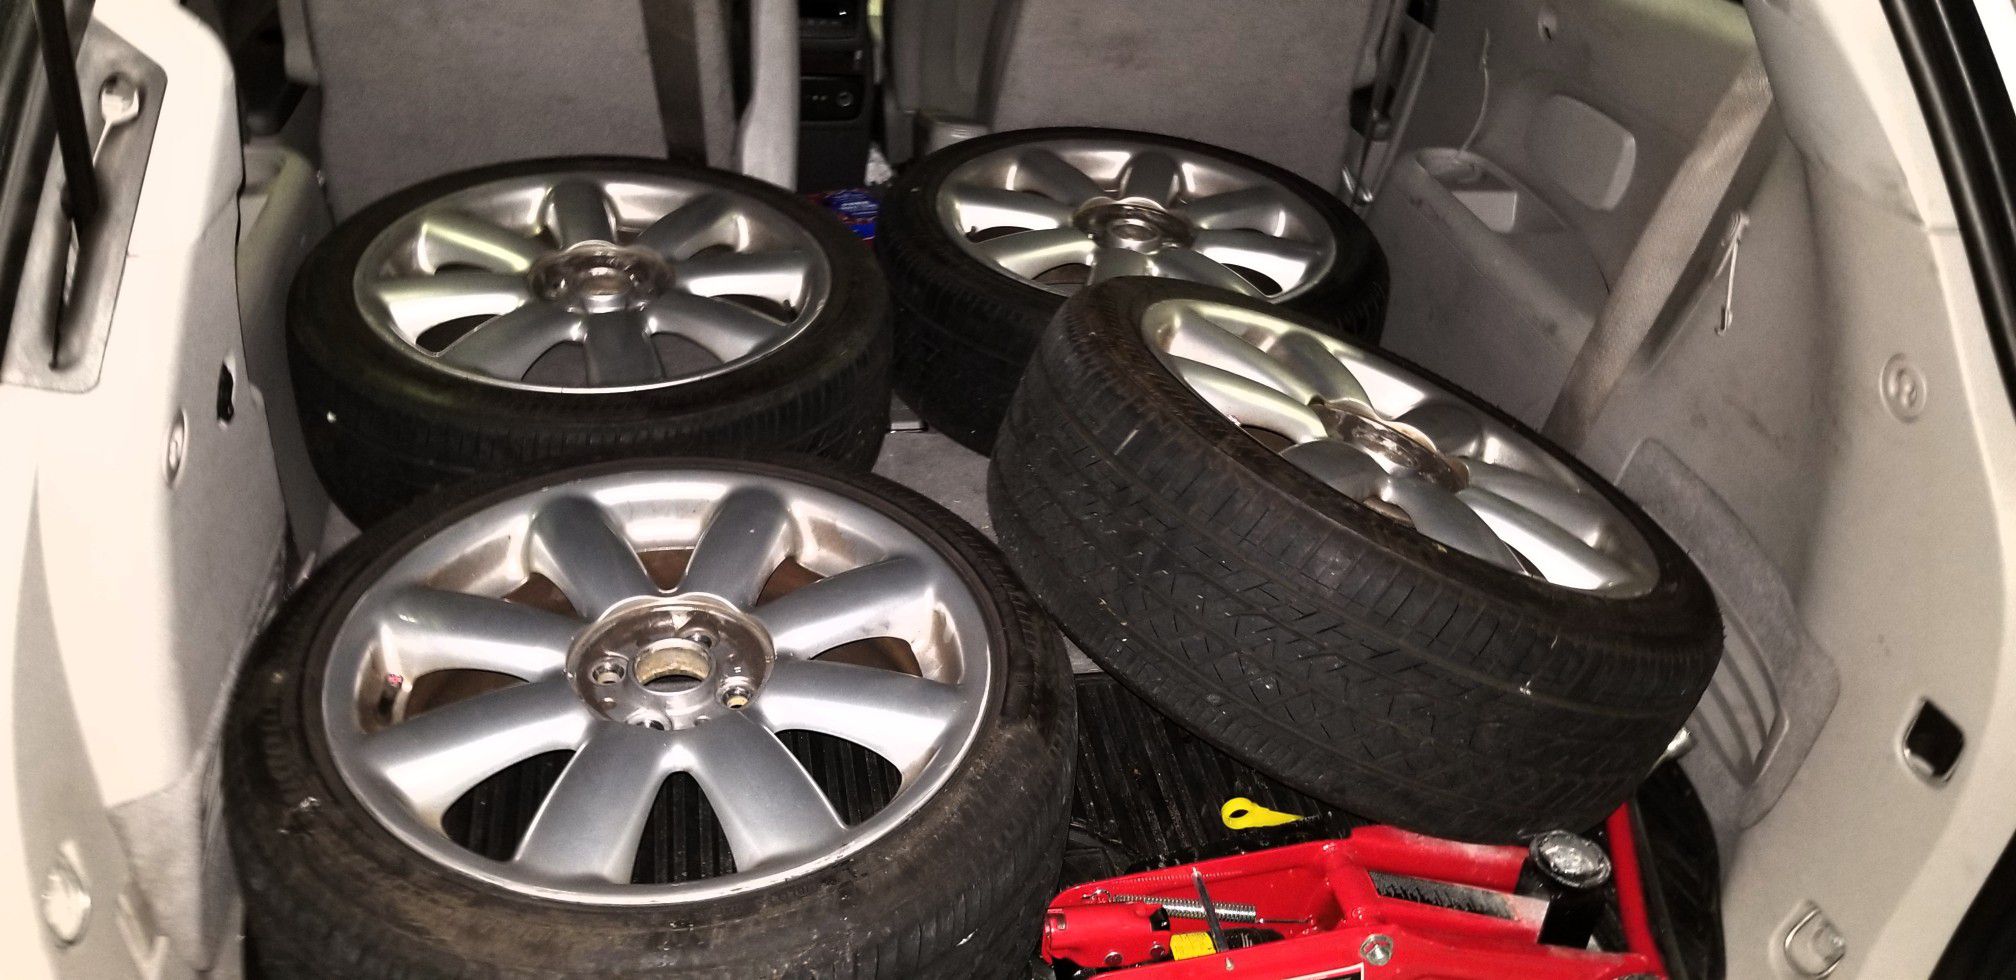 17x7 mini cooper s wheels with new tires 4x100 bolt pattern